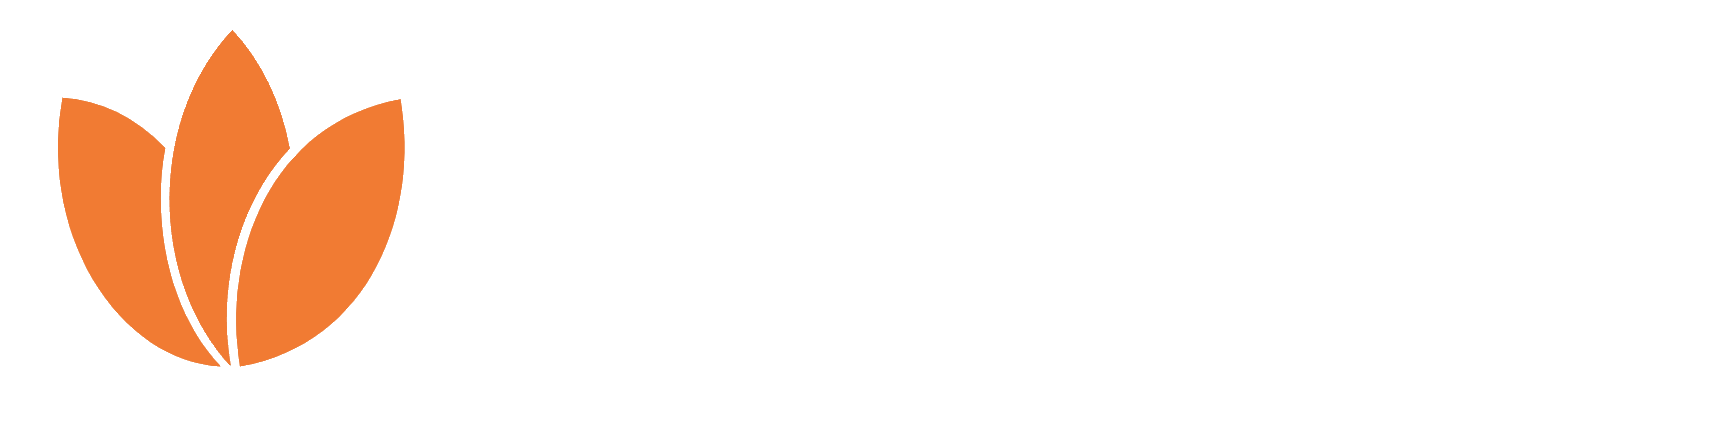 ML International Consulting FCZO